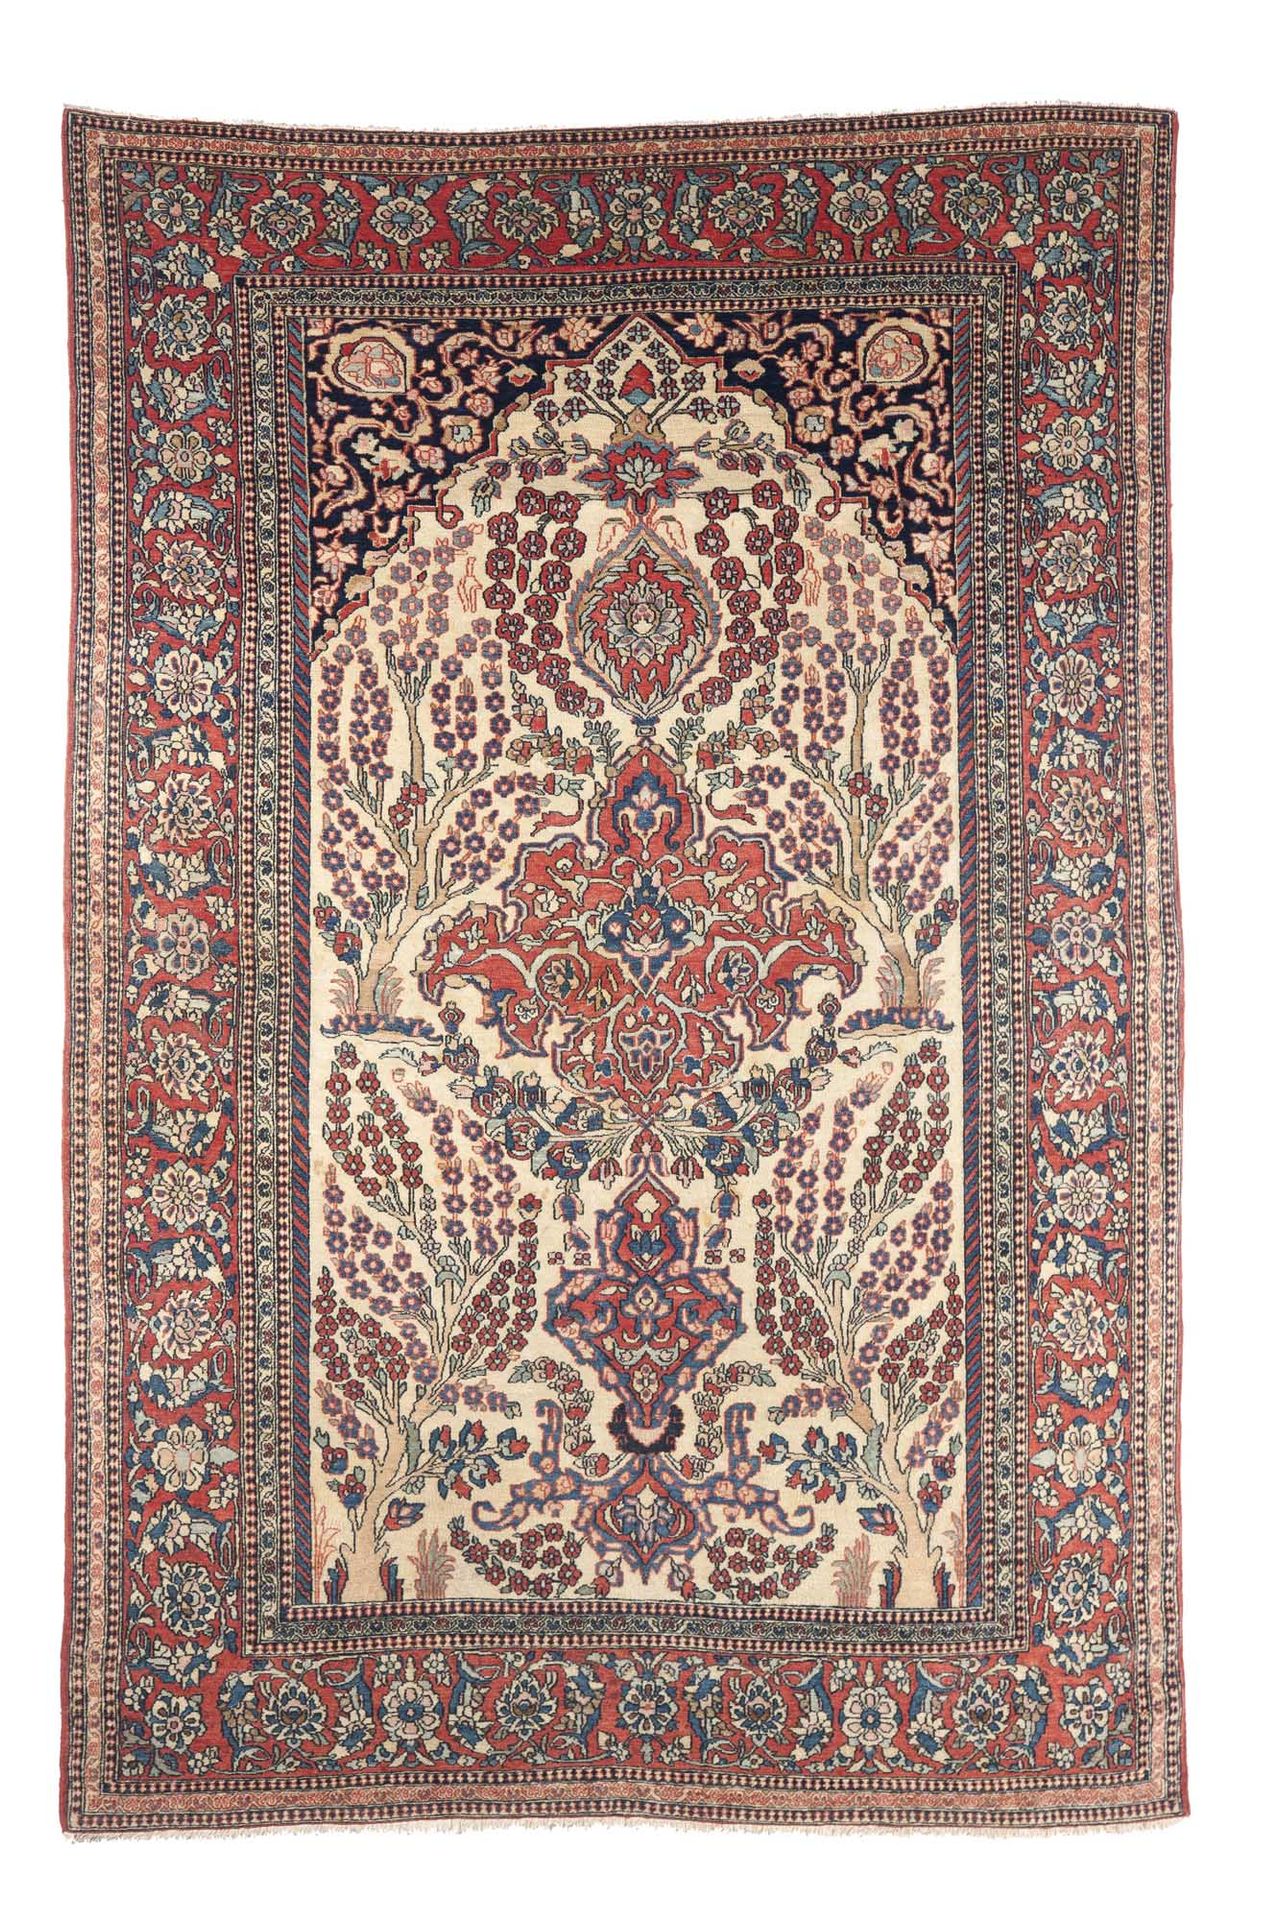 Null ISPAHAN地毯（波斯），19世纪末

尺寸：205 x 137厘米

技术特点 : 羊毛天鹅绒，棉质底板。

在四棵盛开的生命之树的环绕下，宏伟的&hellip;